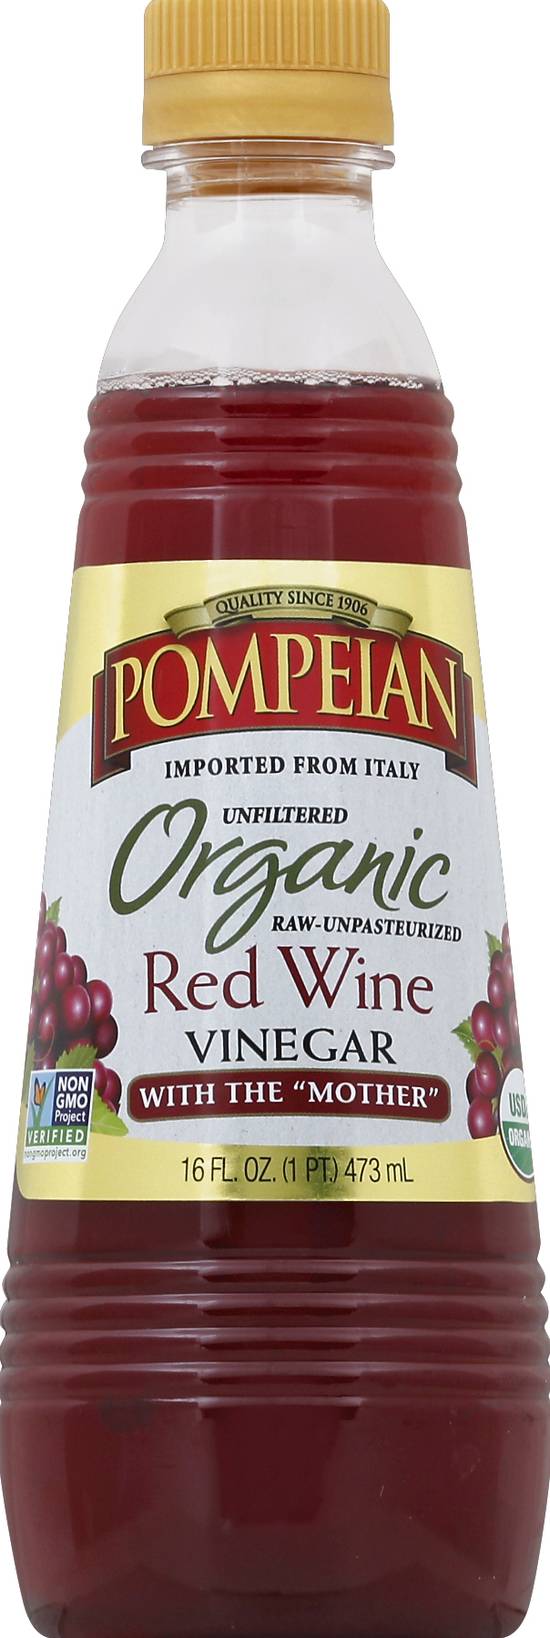 Pompeian Unfiltered Organic Red Wine Vinegar